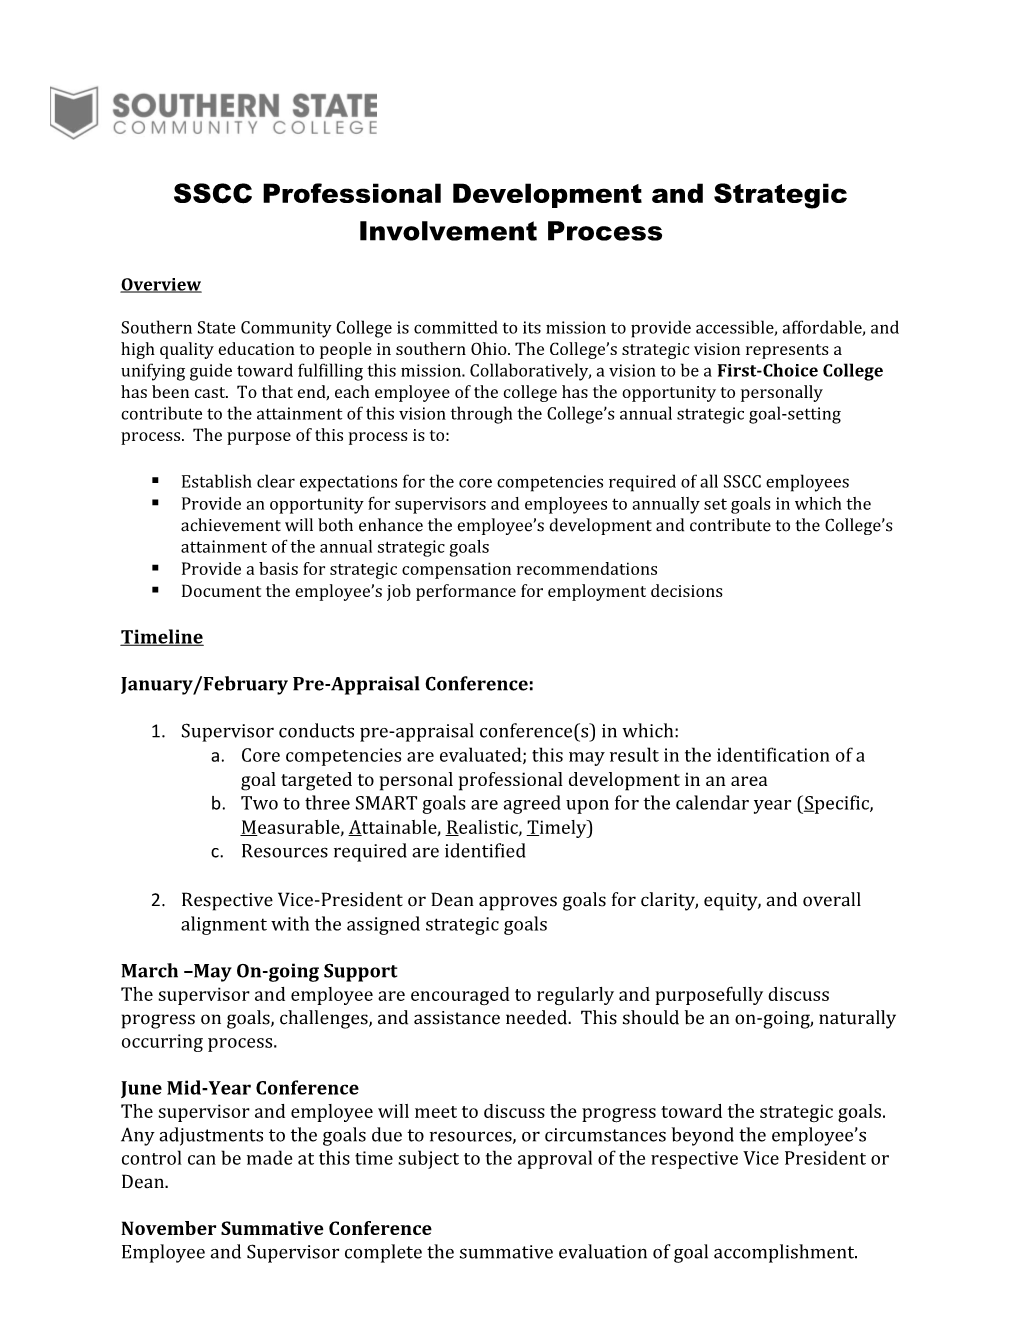 SSCC Professional Development and Strategic Involvement Process